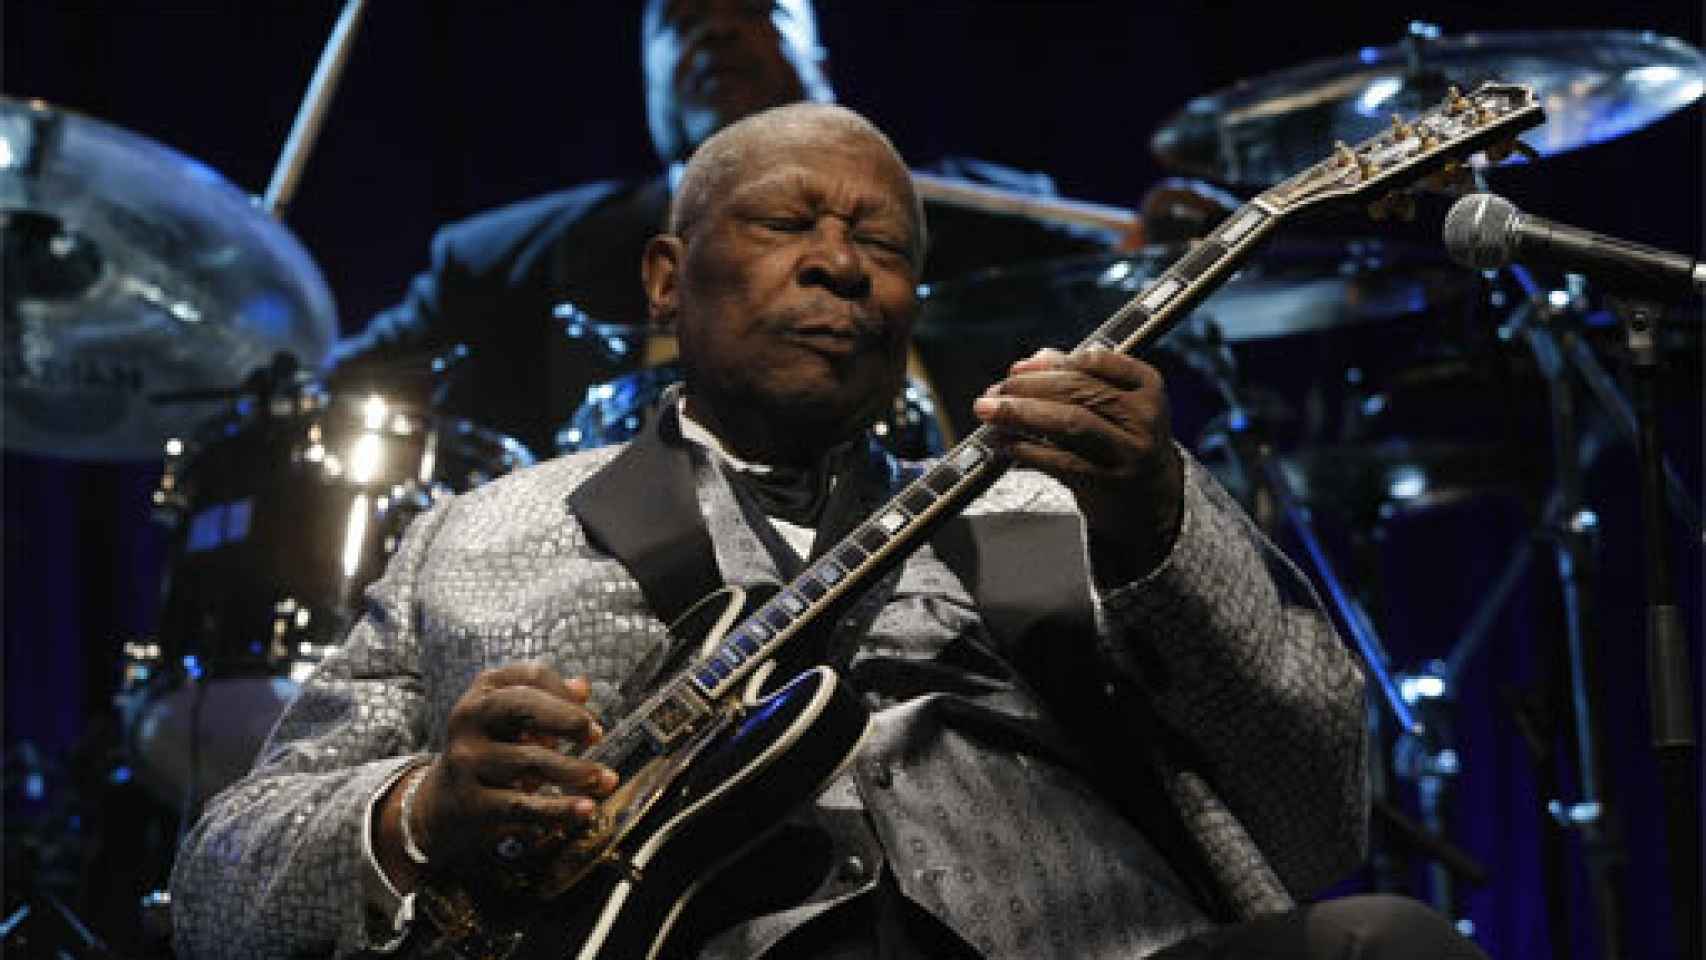 Image: Muere B.B. King, la leyenda del blues